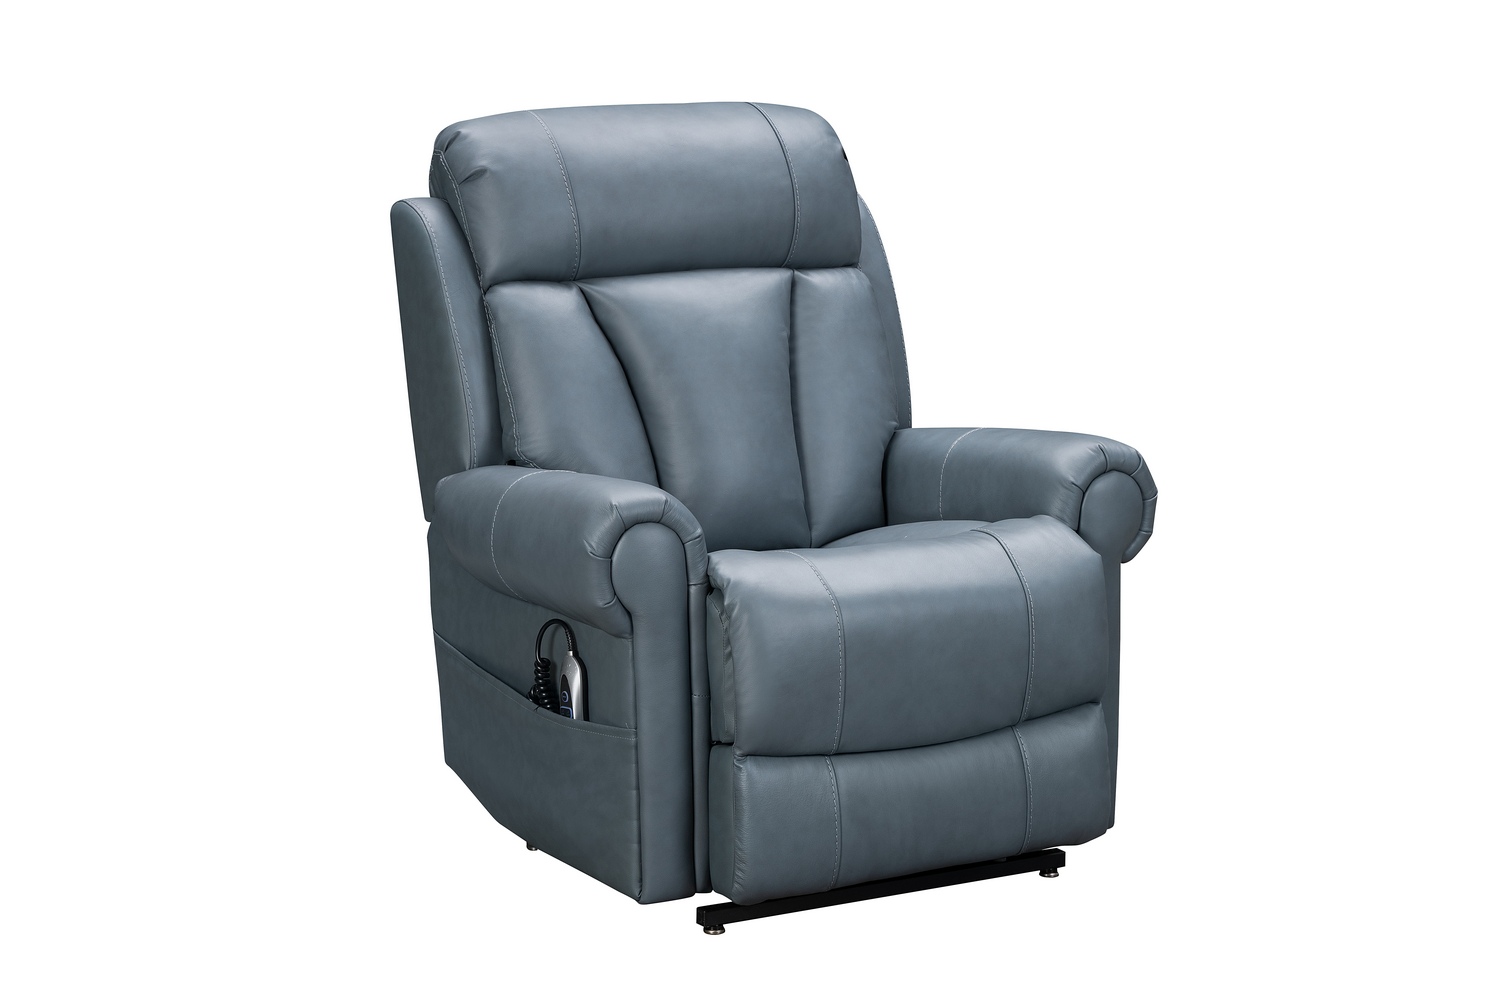 Barcalounger Lyndon Lift Chair Recliner Chair with Power Head Rest, Power Lumbar and Lay Flat Mechanism - Masen Bluegray/Leather Match